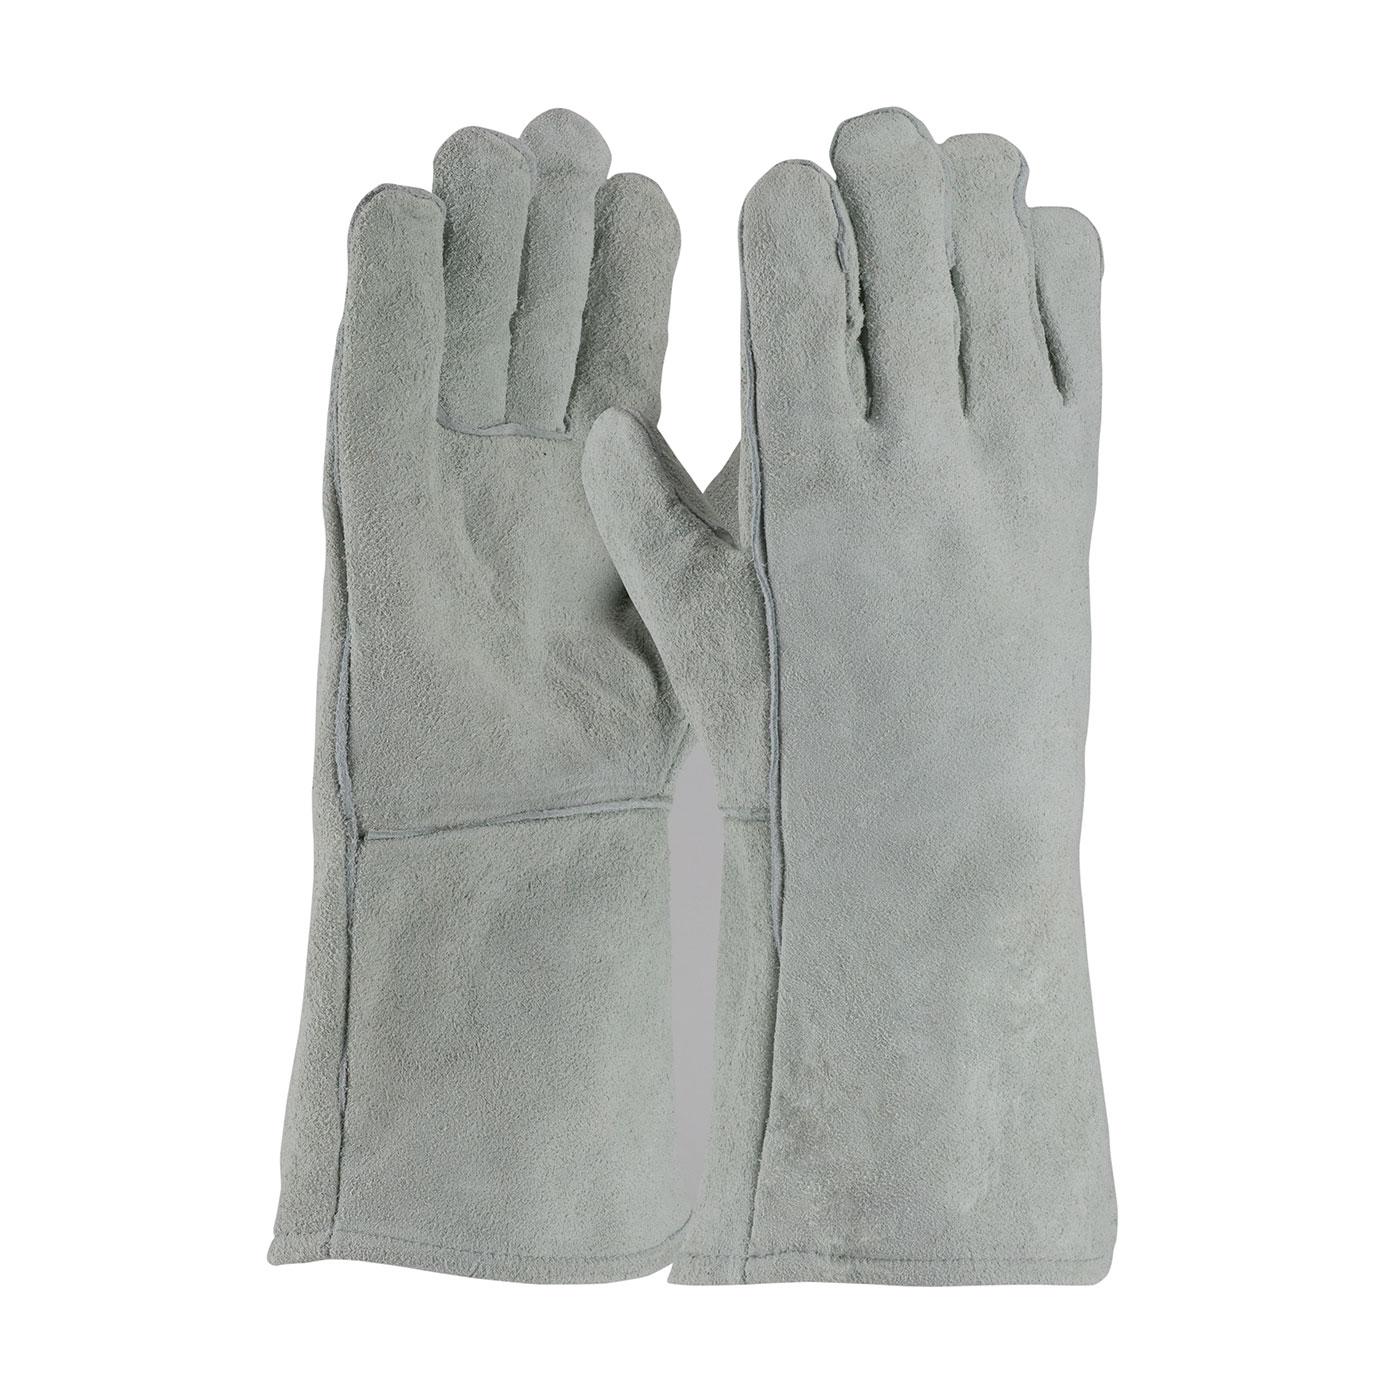 PIP 73-888 Shoulder Split Cowhide Leather Welder's Glove with Cotton Liner PID-73 888